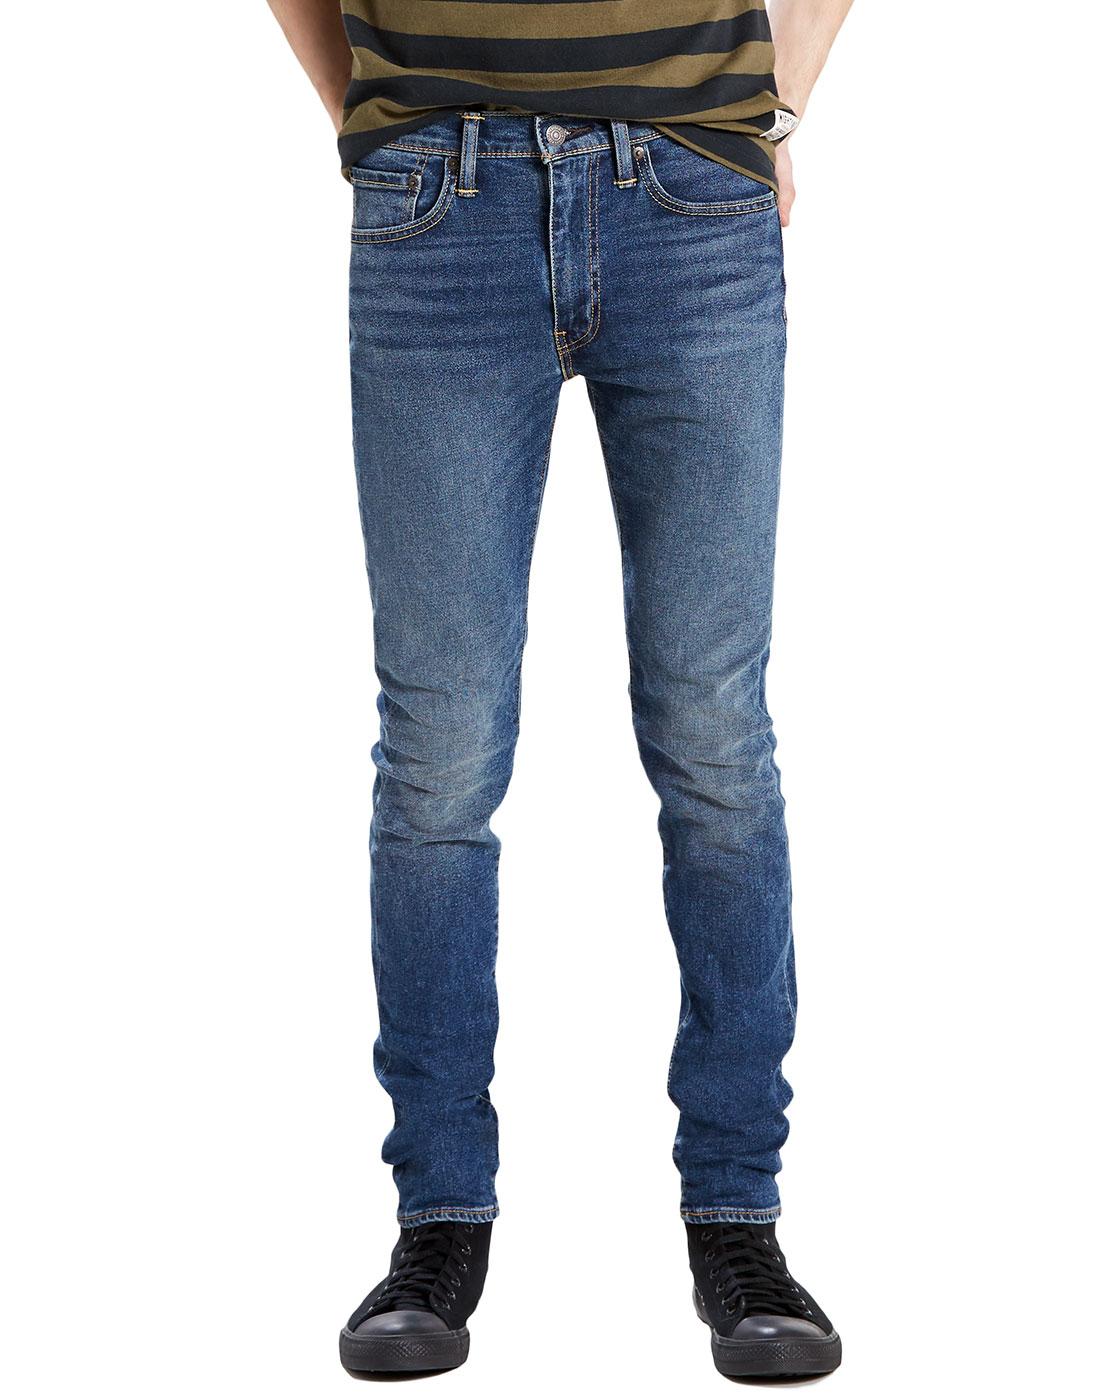 LEVI'S 519 Retro Mod Extreme Skinny Fit Denim Jeans Williamsburg